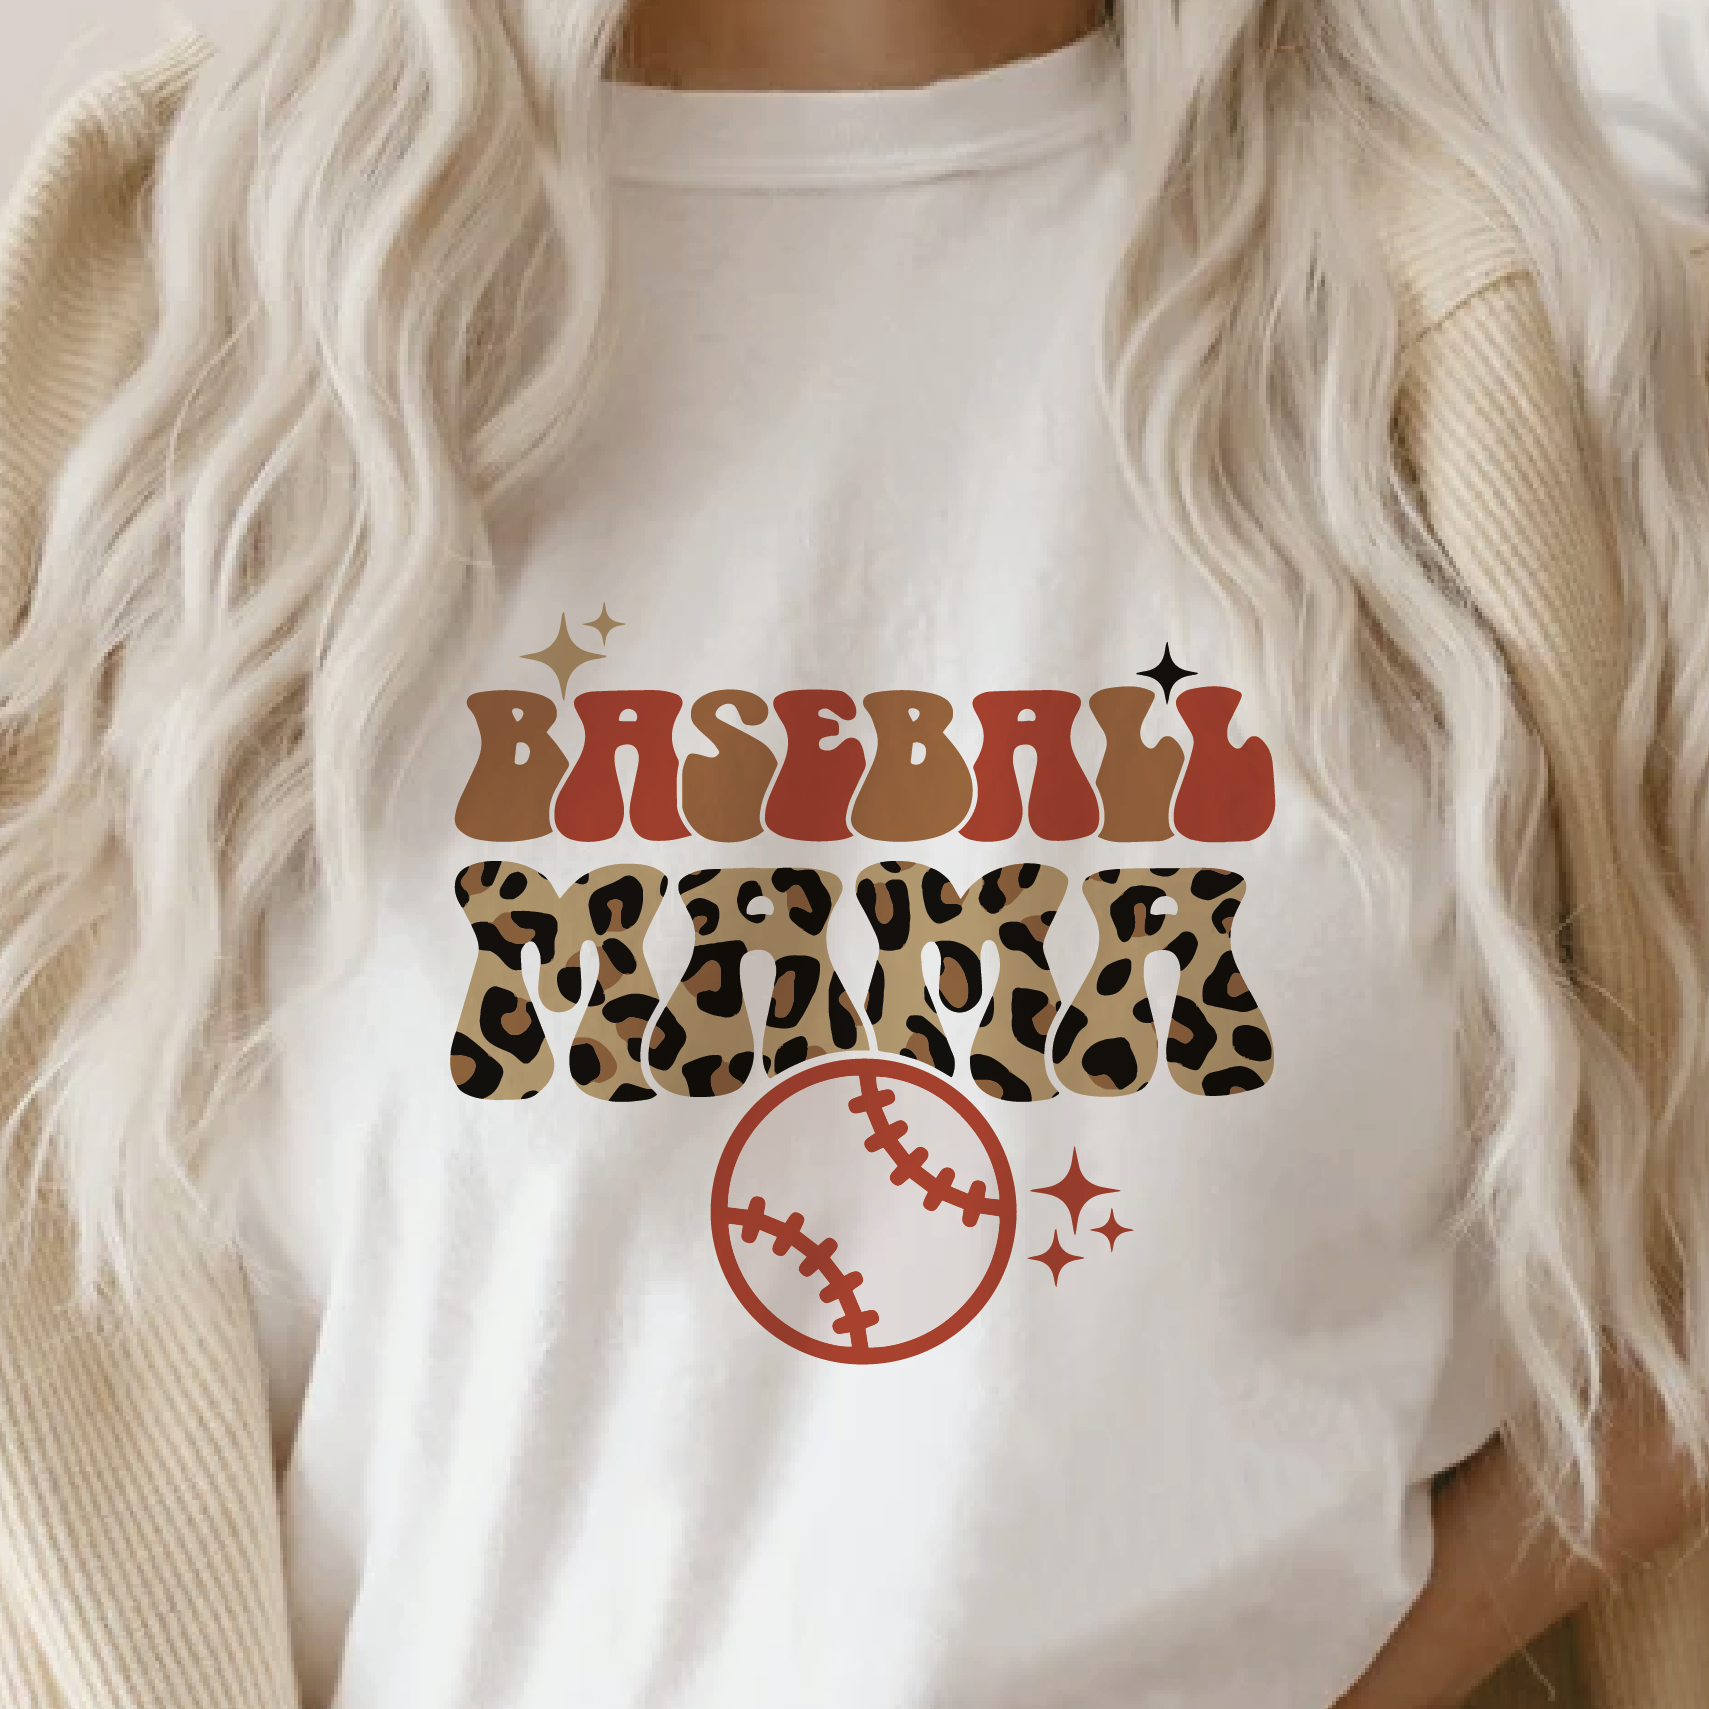 a woman wearing a baseball shirt with a leopard print